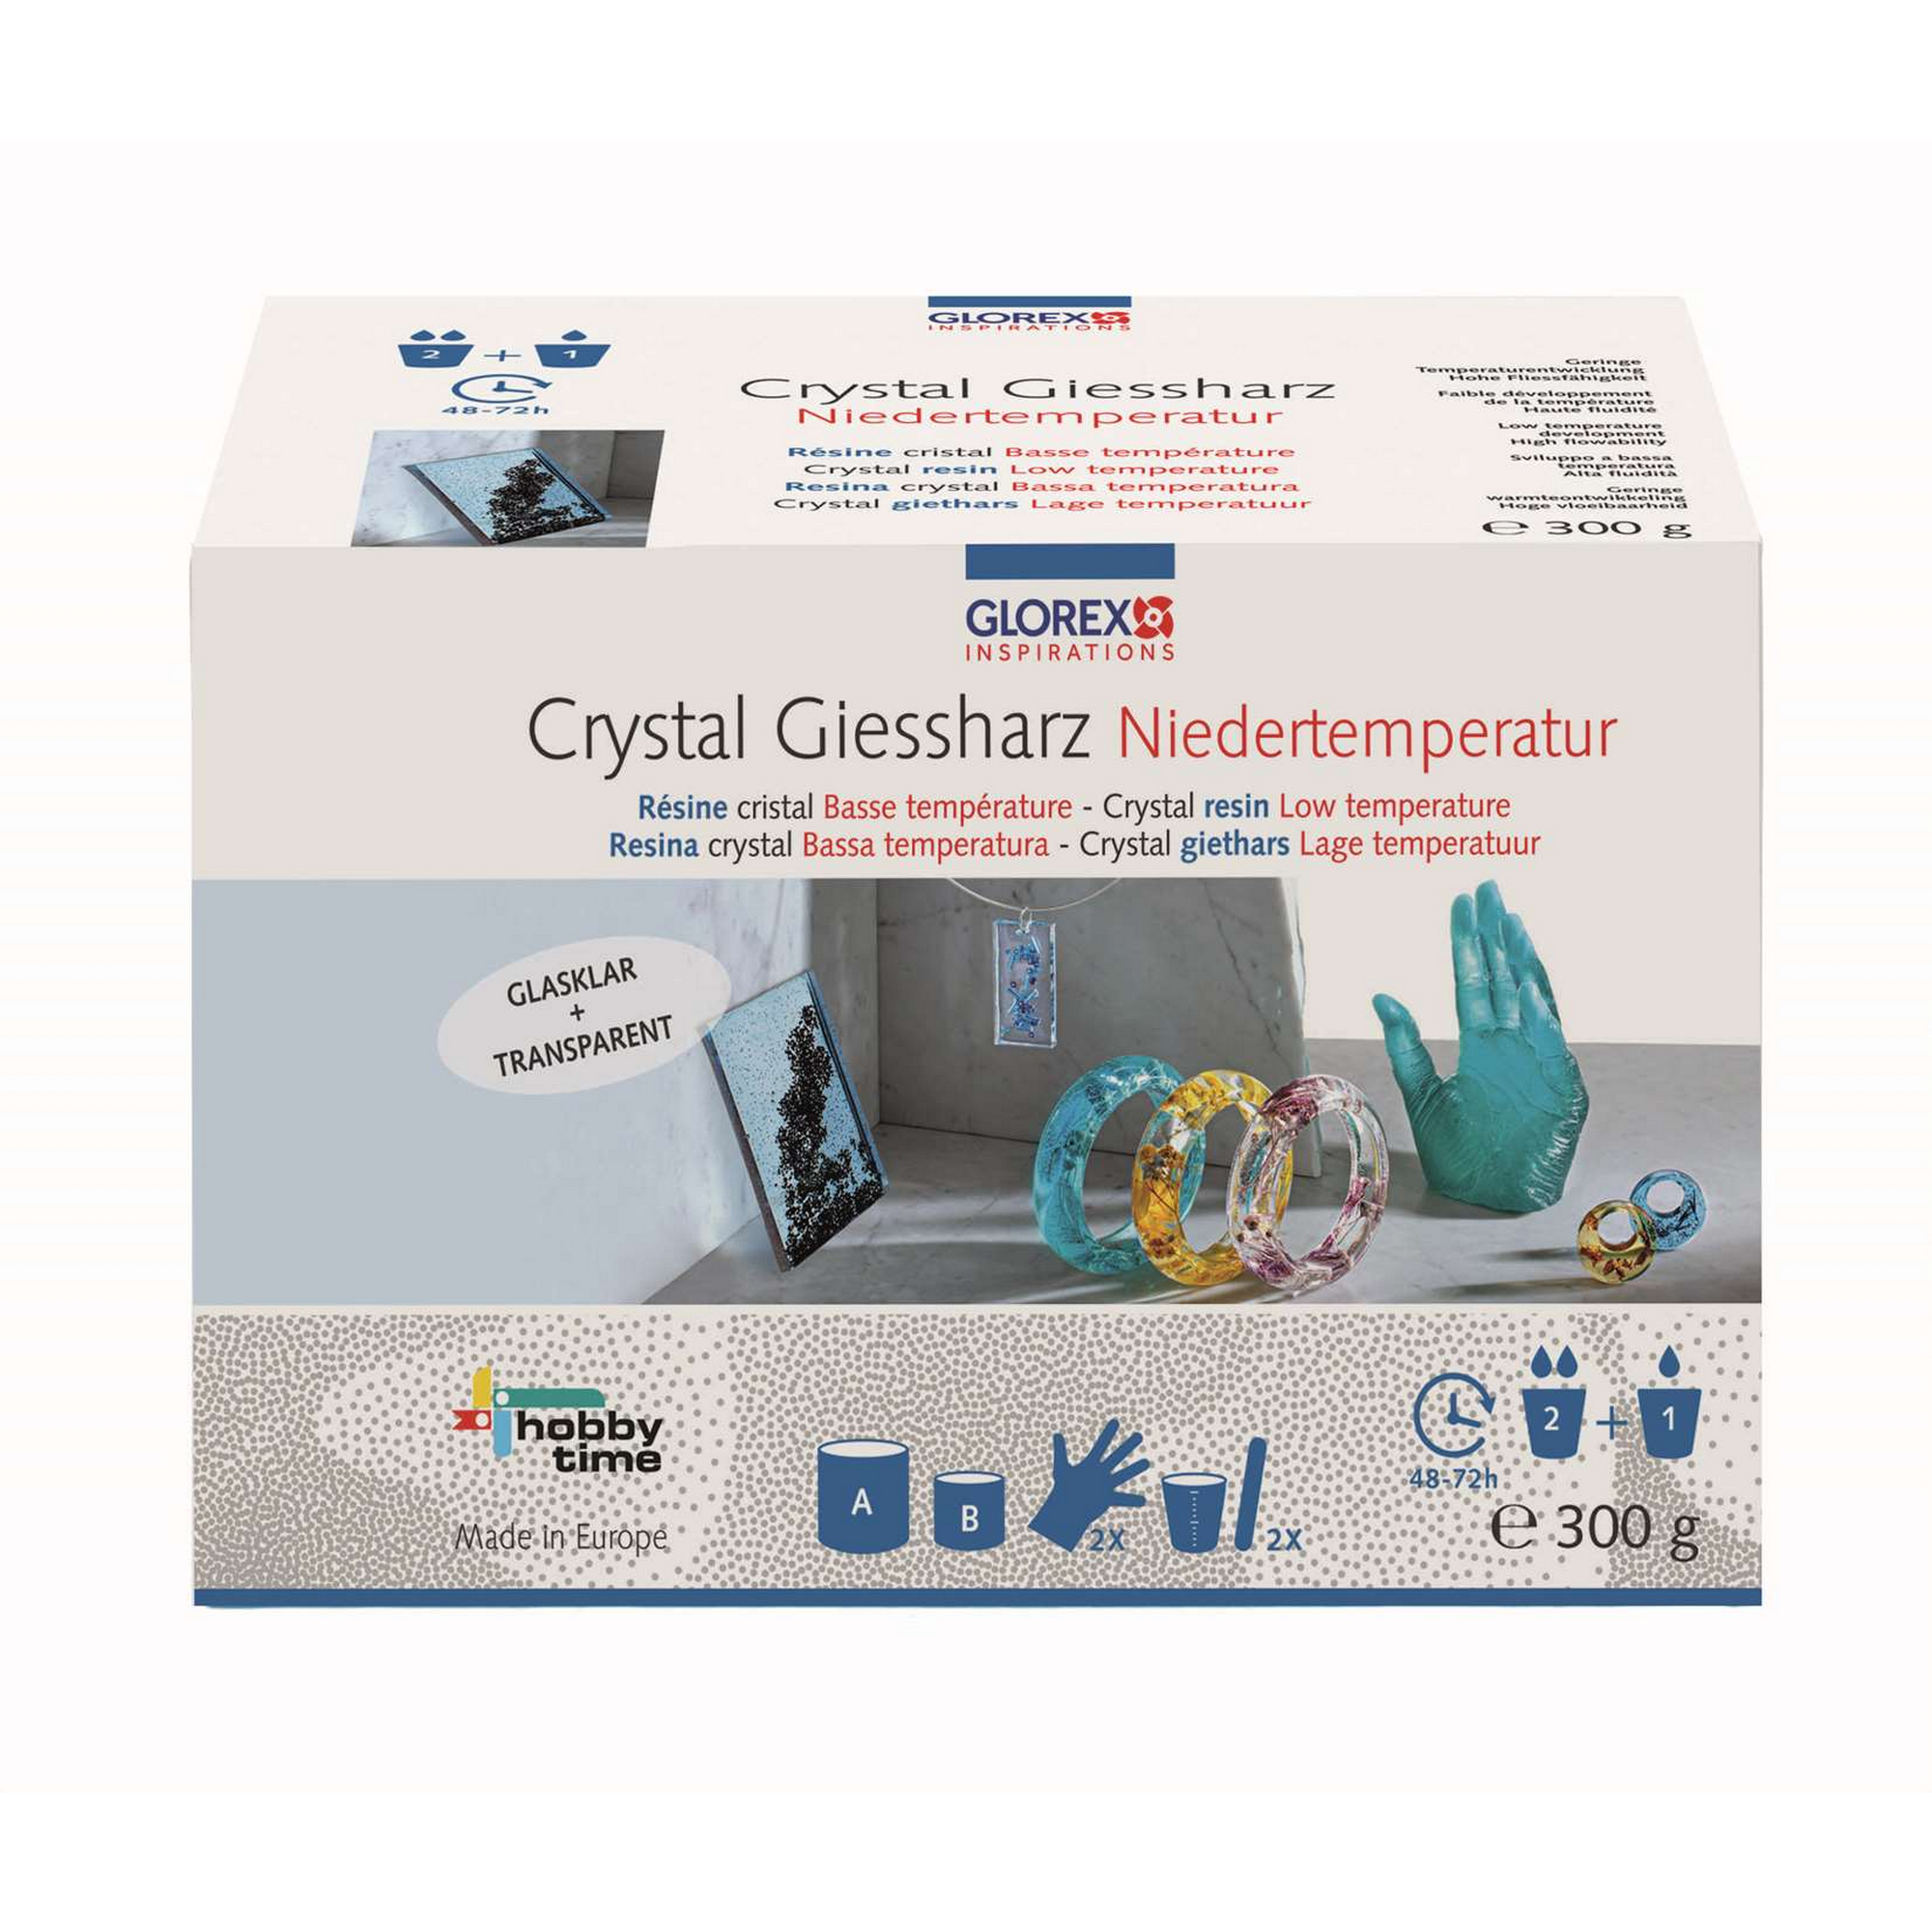 Gießharz 'Crystal' Niedertemperatur 300 g + product picture